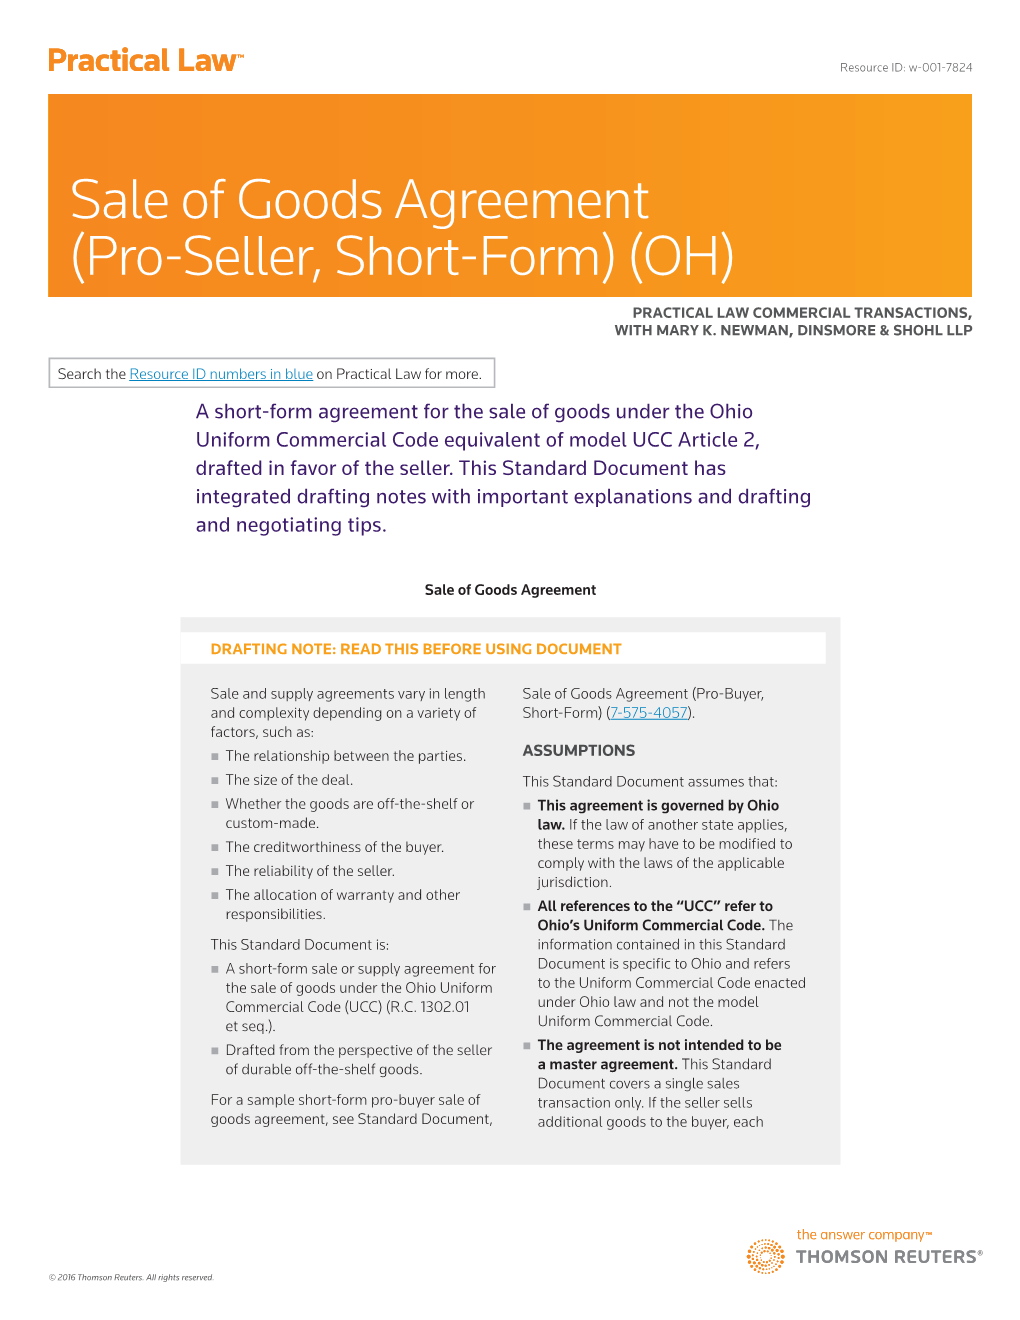 Sale of Goods Agreement (Pro-Seller, Short-Form) (OH)